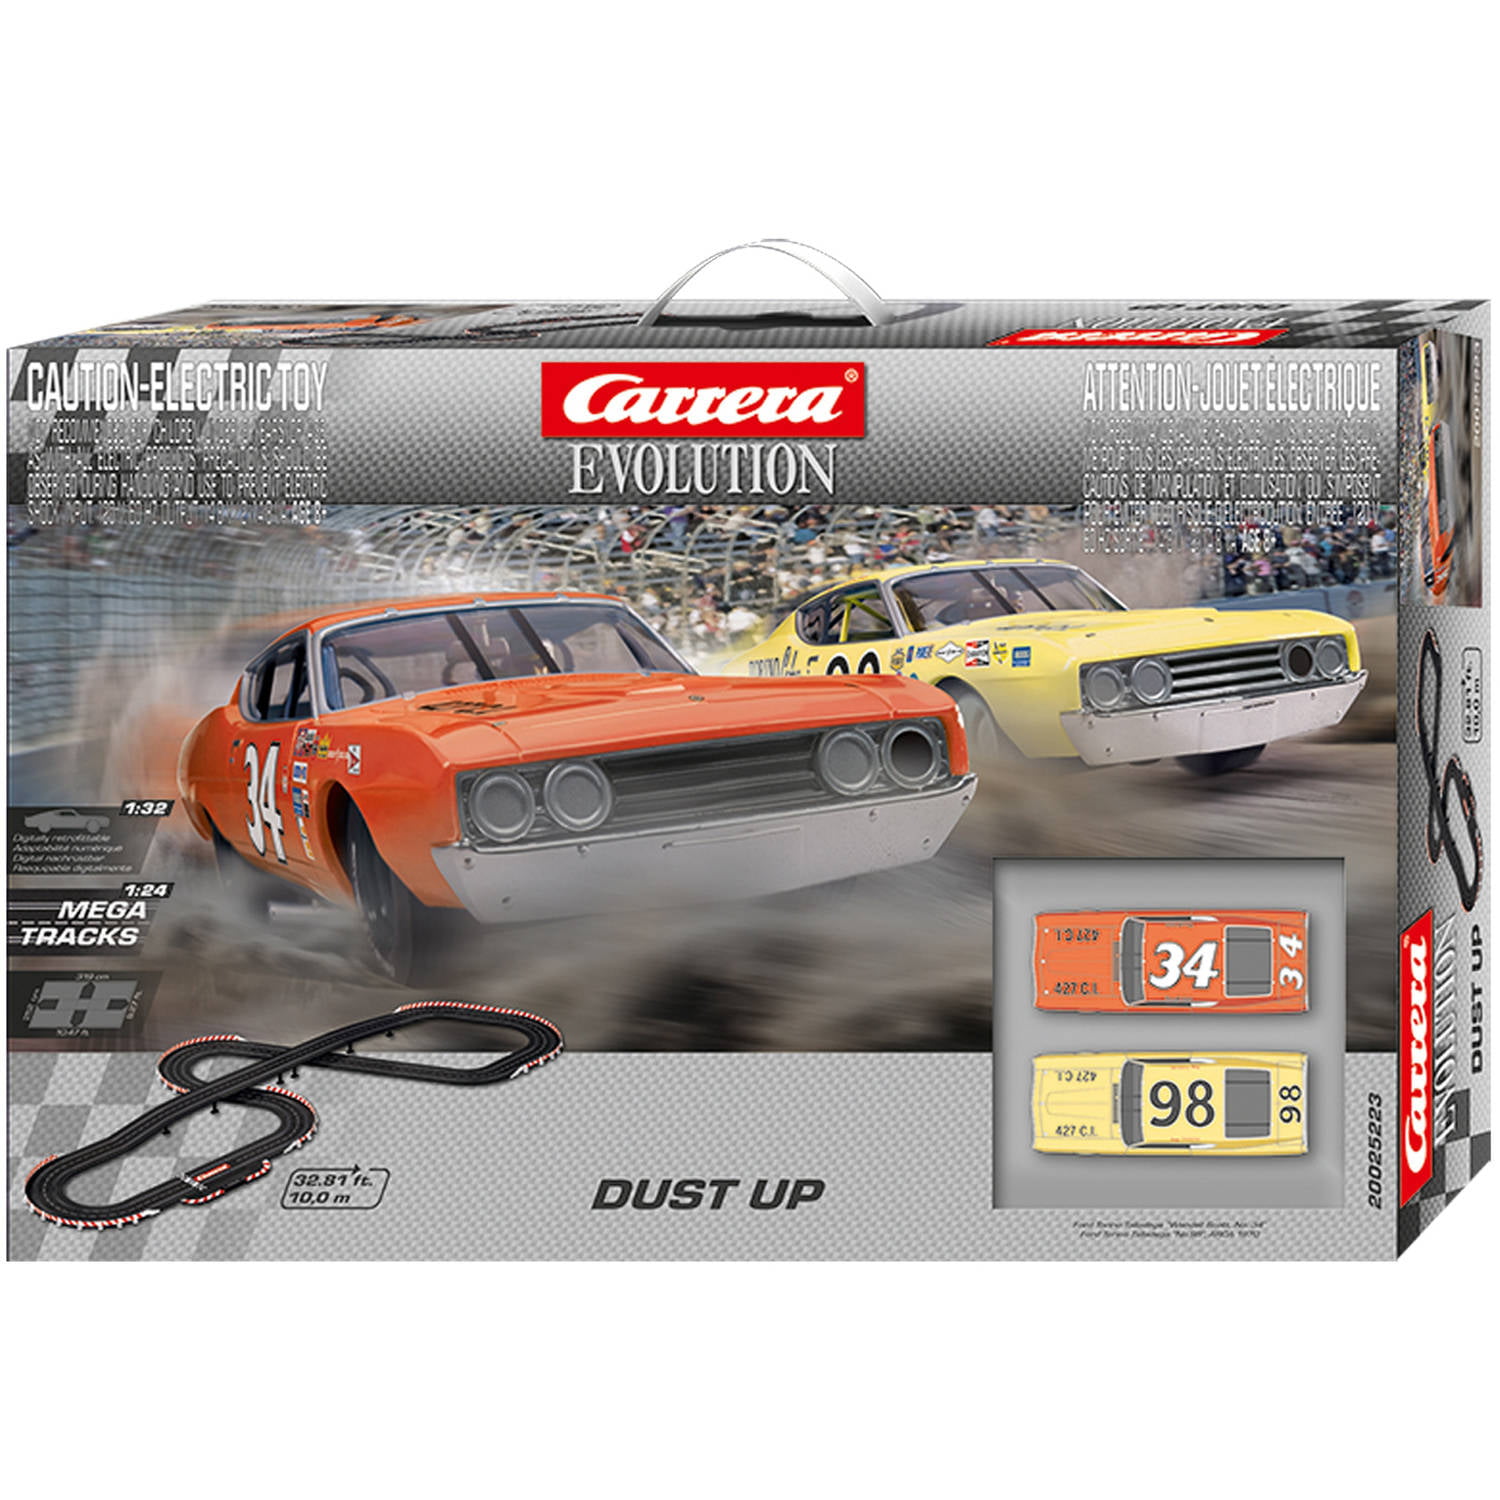 Carrera Dust Up Evolution 1:32 Scale Slot Car Race Set